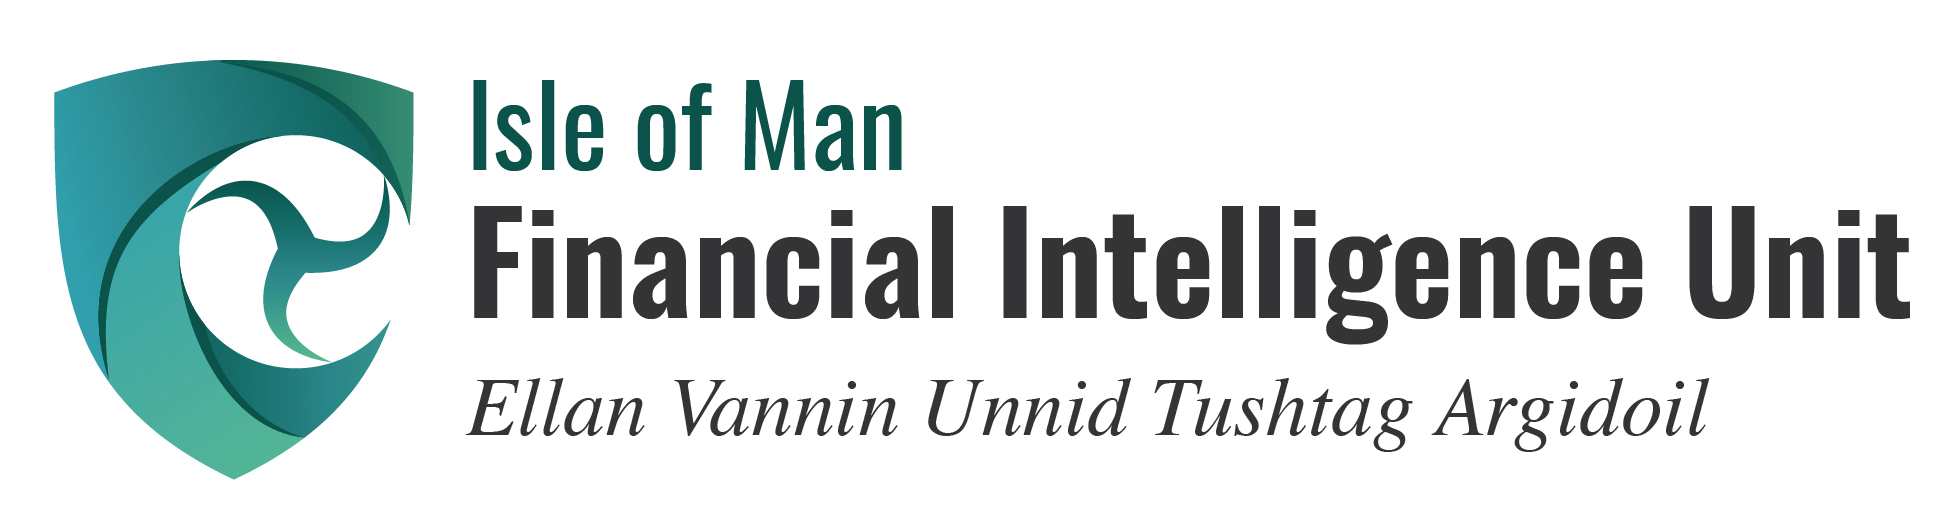 Isle of Man Financial Intelligence Unit logo and Manx equivalent: Ellan Vannin Unnid Tushtag Argidoil